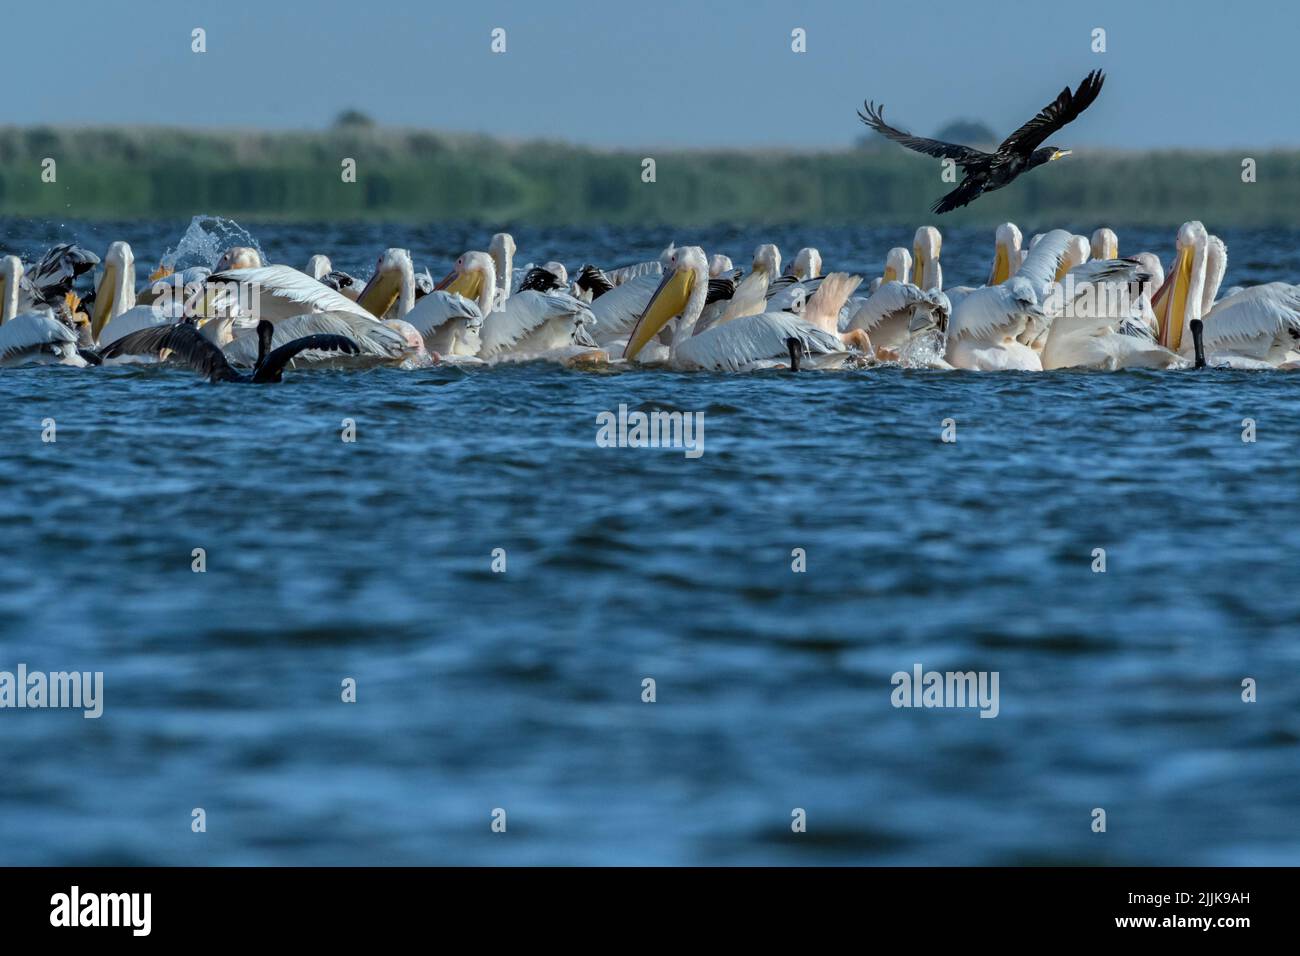 Pellicano (Pelecanus onocrotalus), White Pelican. Cormorano (Phalacrocorax carbo), Cormorant. Romania Stock Photo